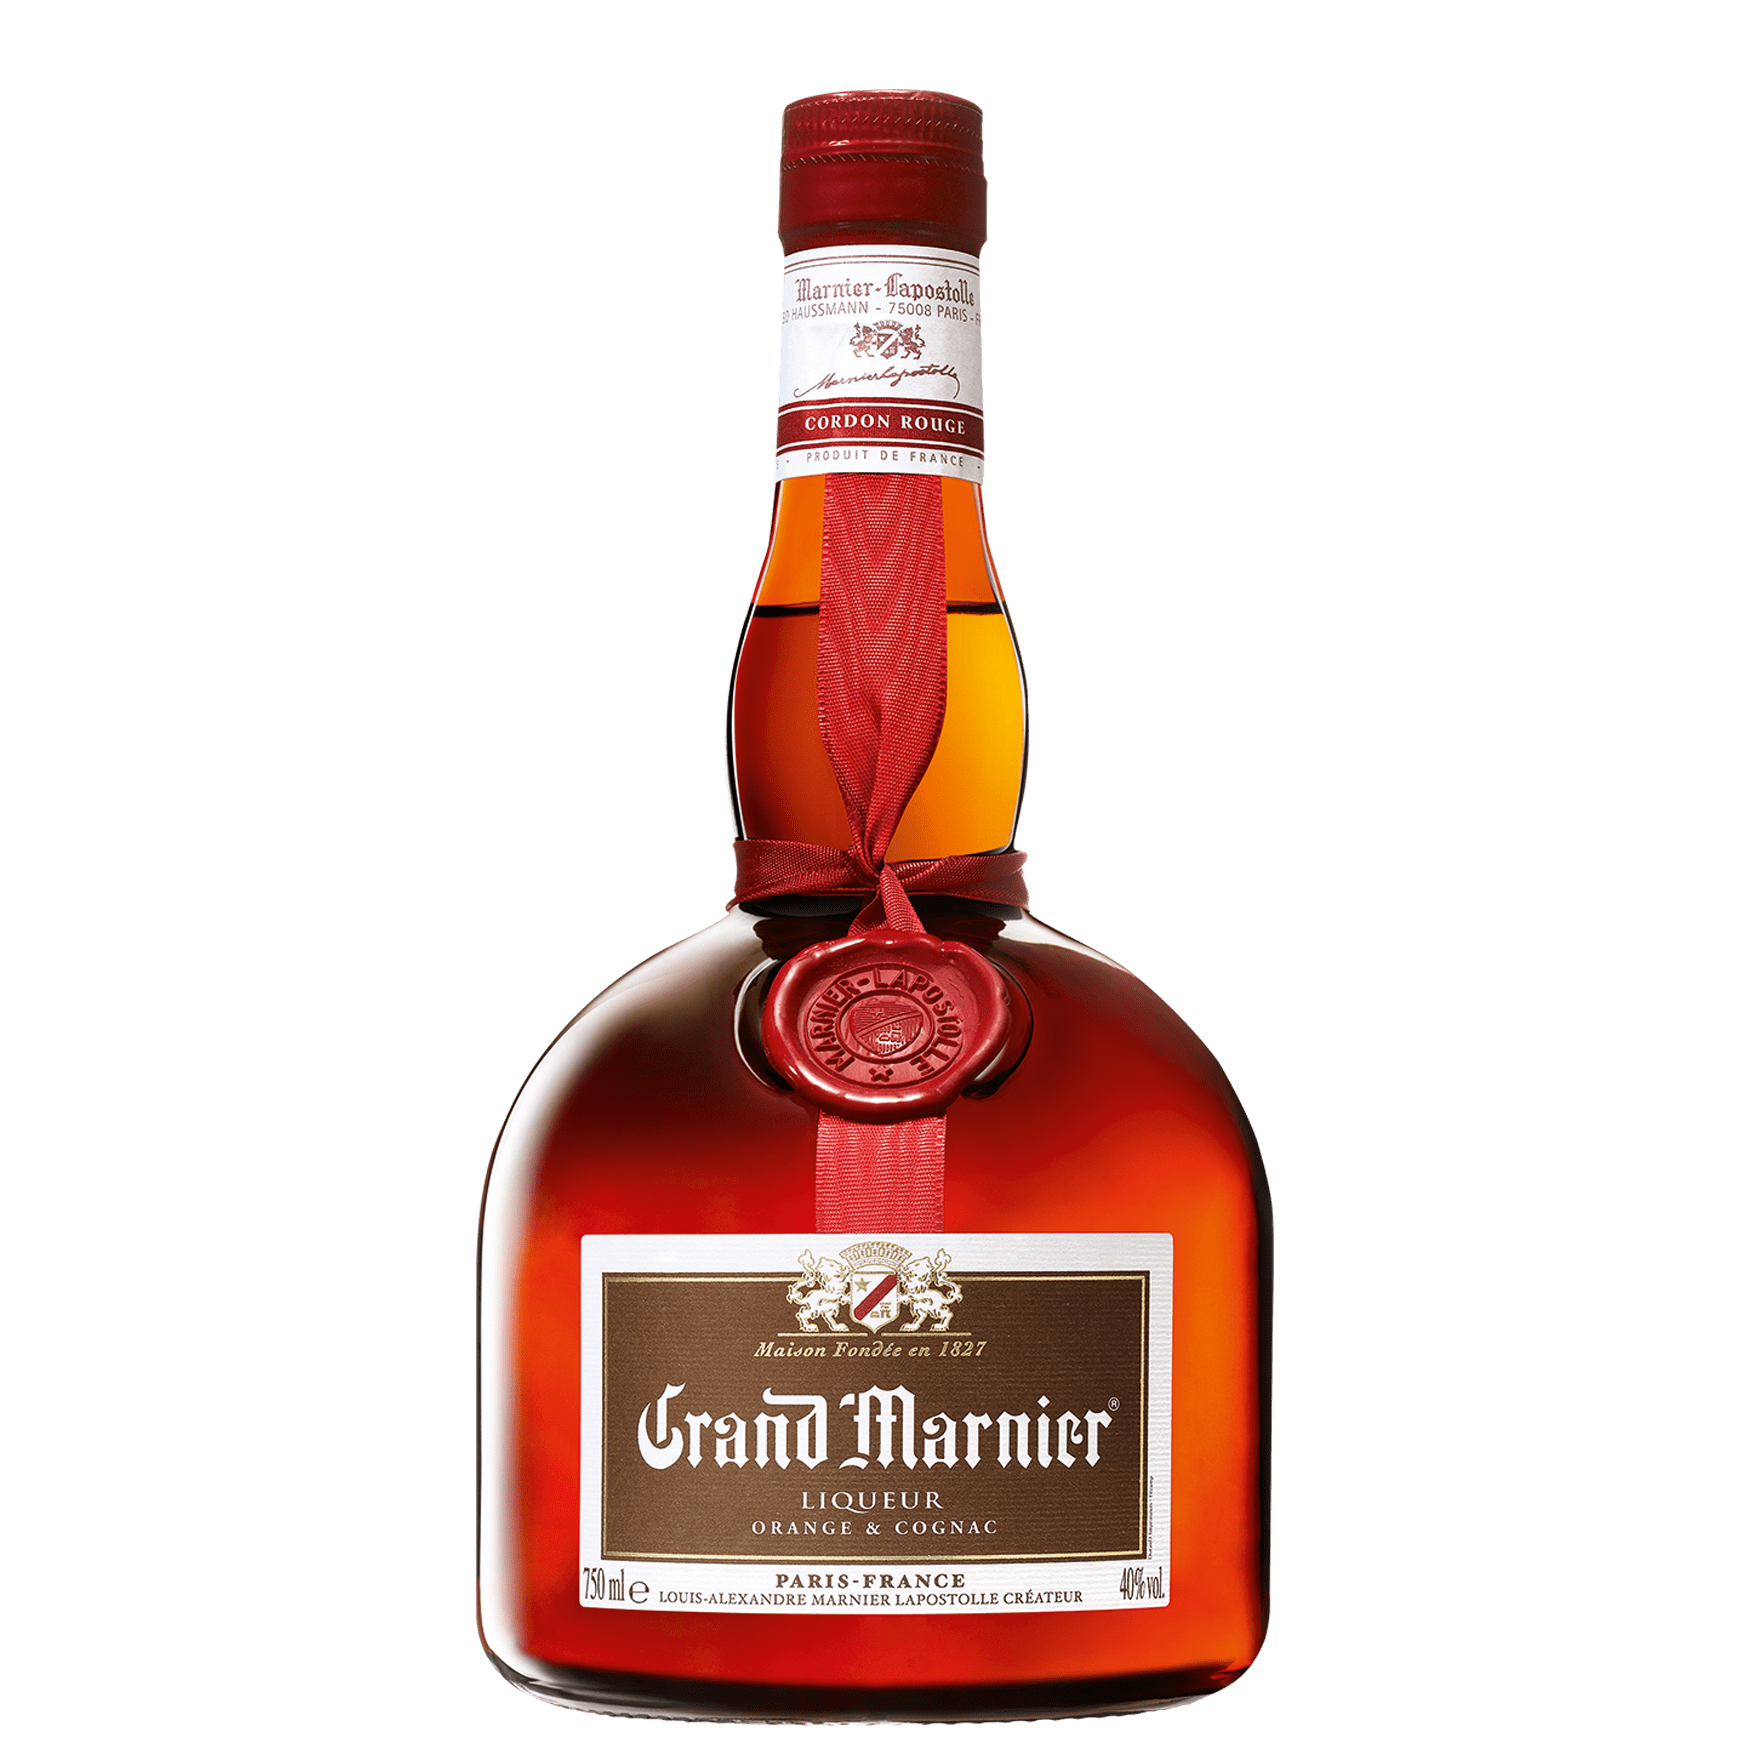 Grand Marnier (70cl) online bestellen - Getränke-Shop | justDrink.ch